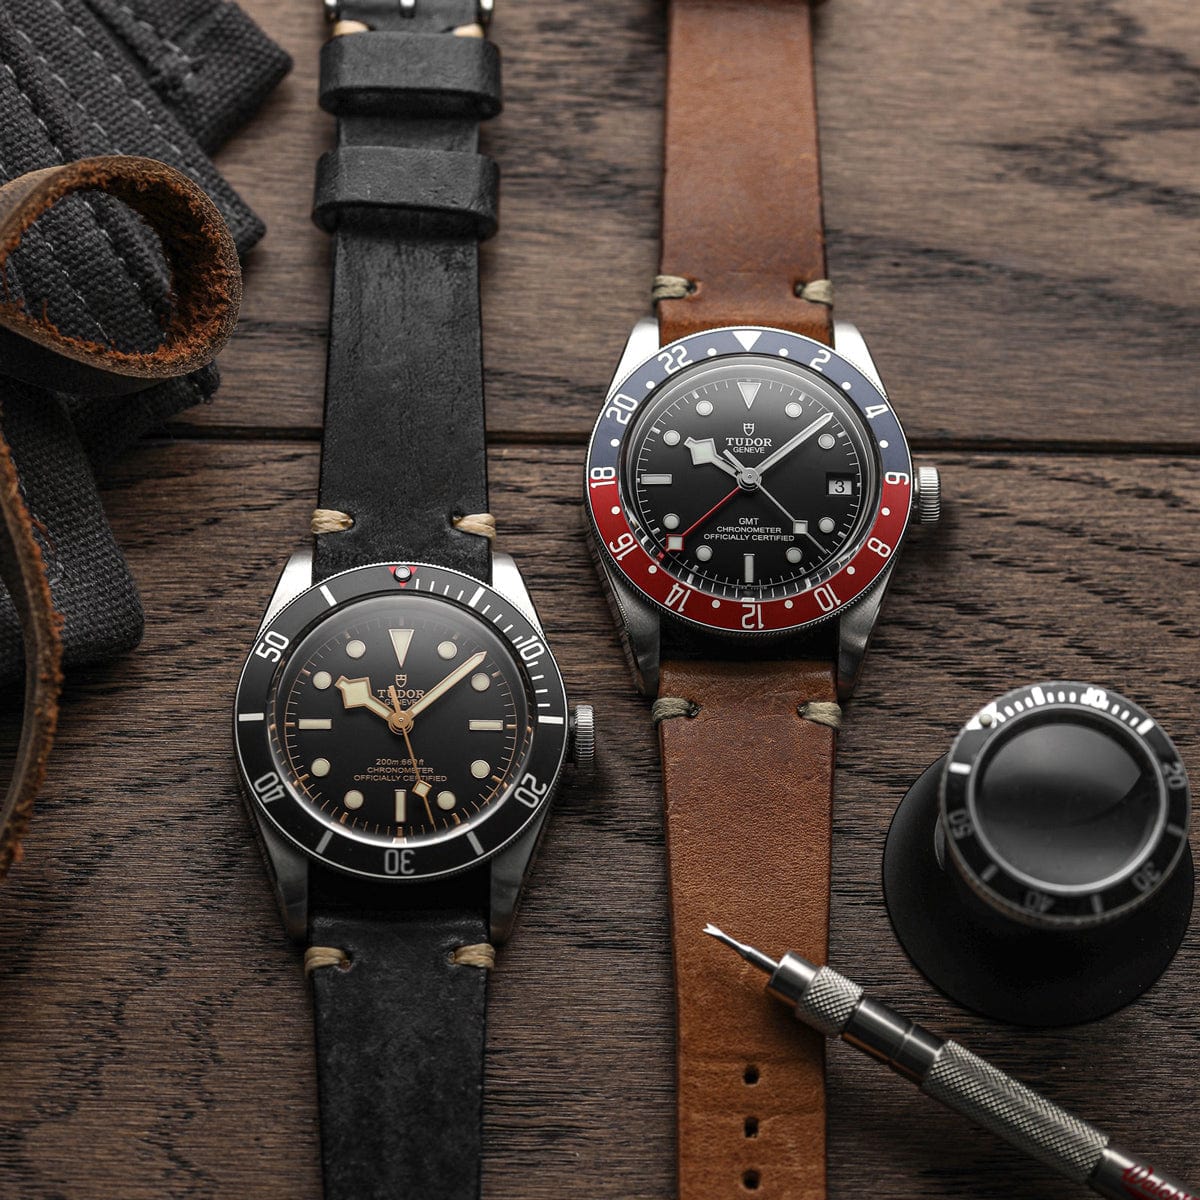 Simple Handmade Italian Leather Watch Strap - Black